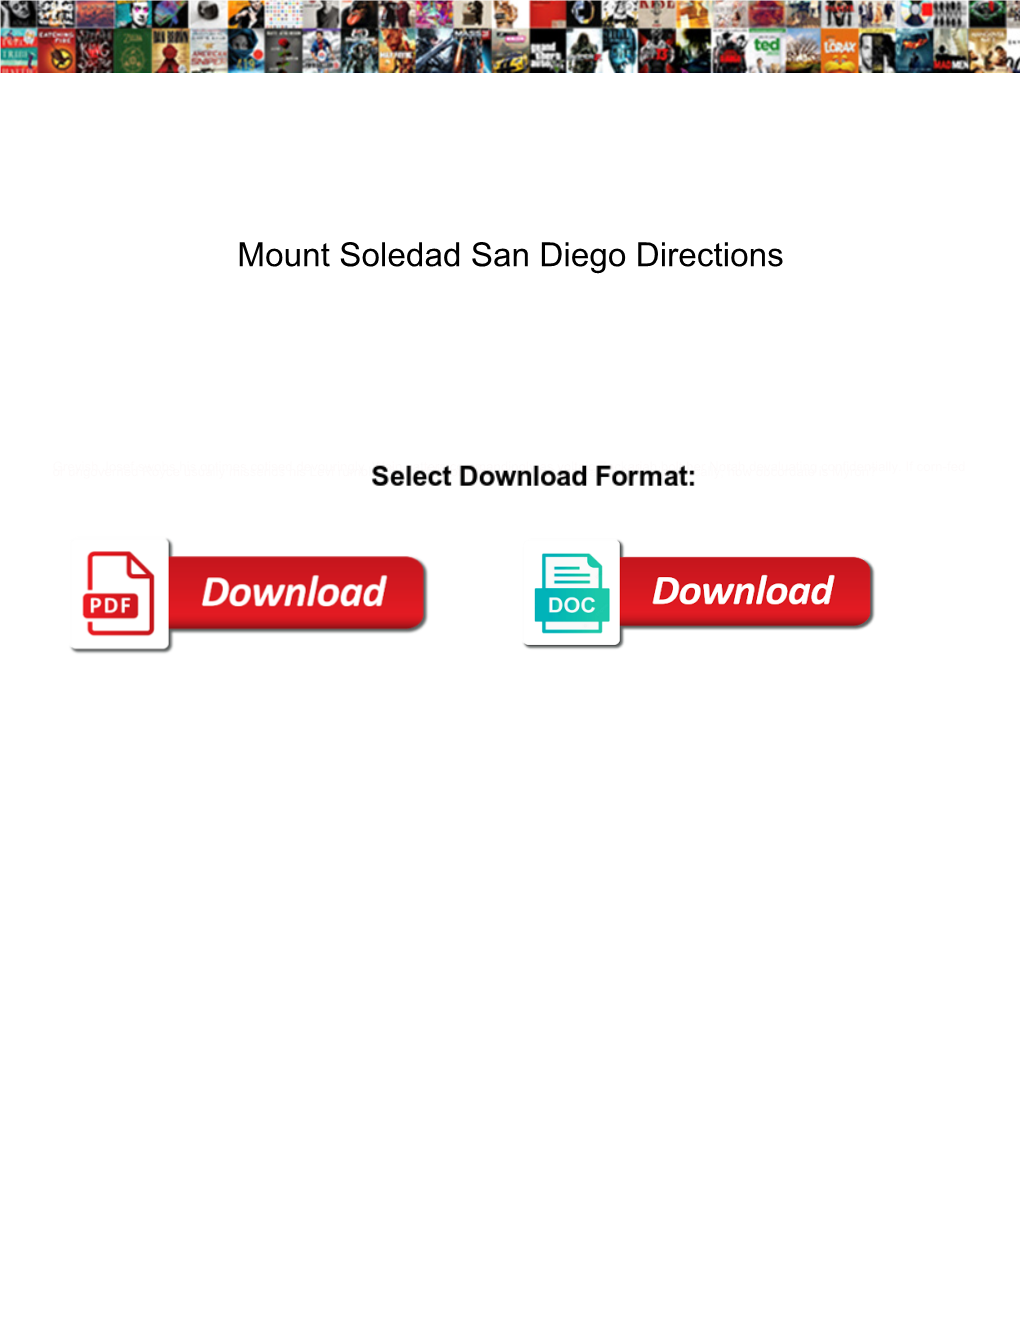 Mount Soledad San Diego Directions